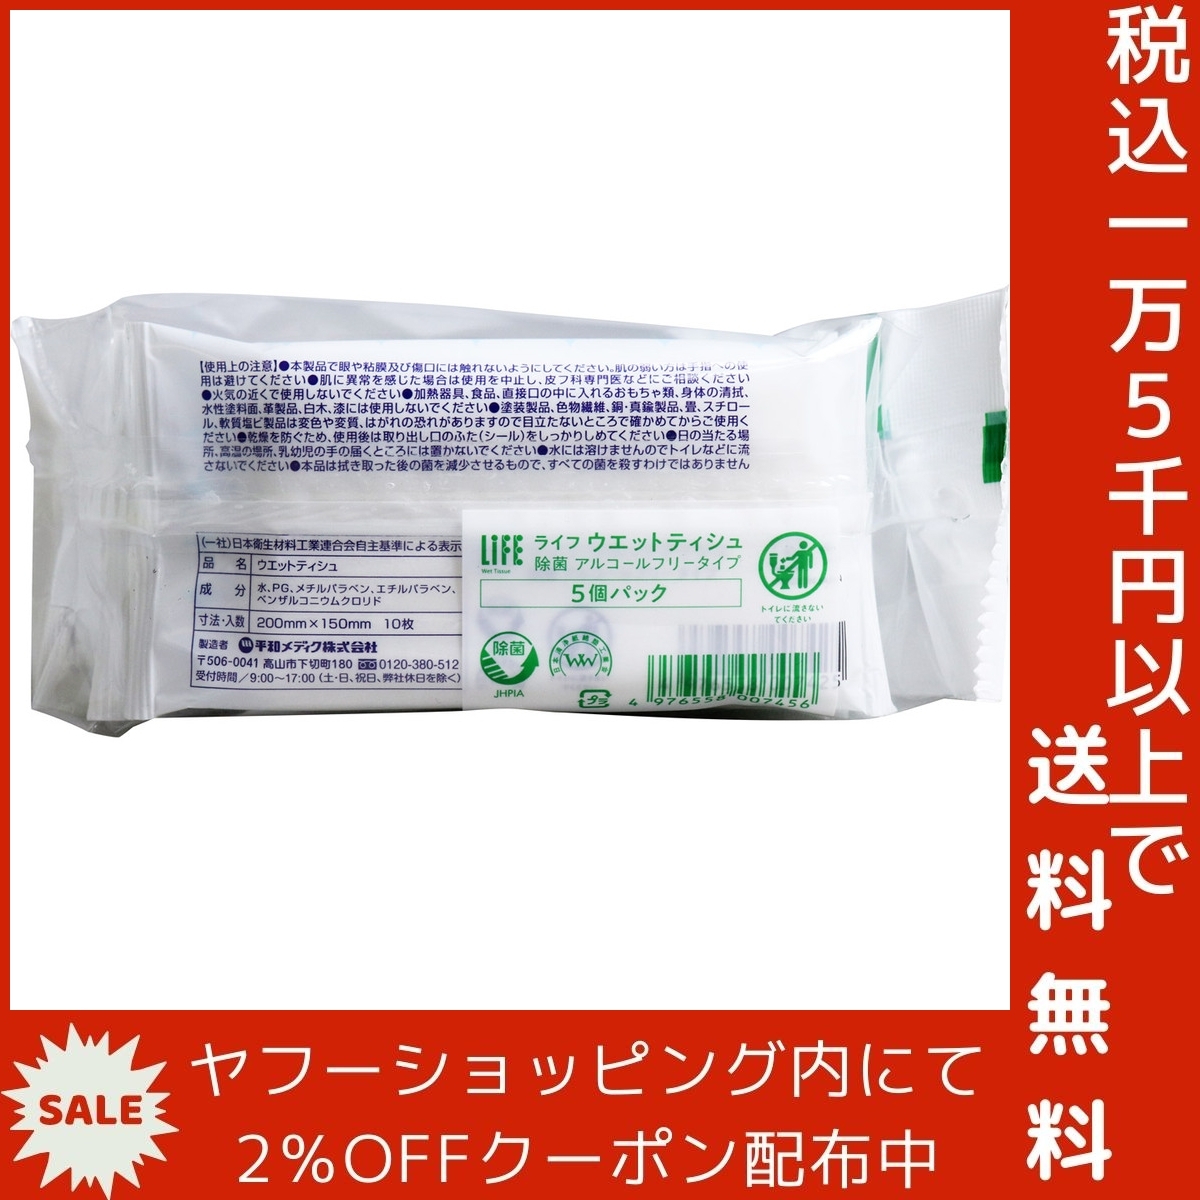  life bacteria elimination wet tishu alcohol free type 10 sheets insertion ×5 piece pack 